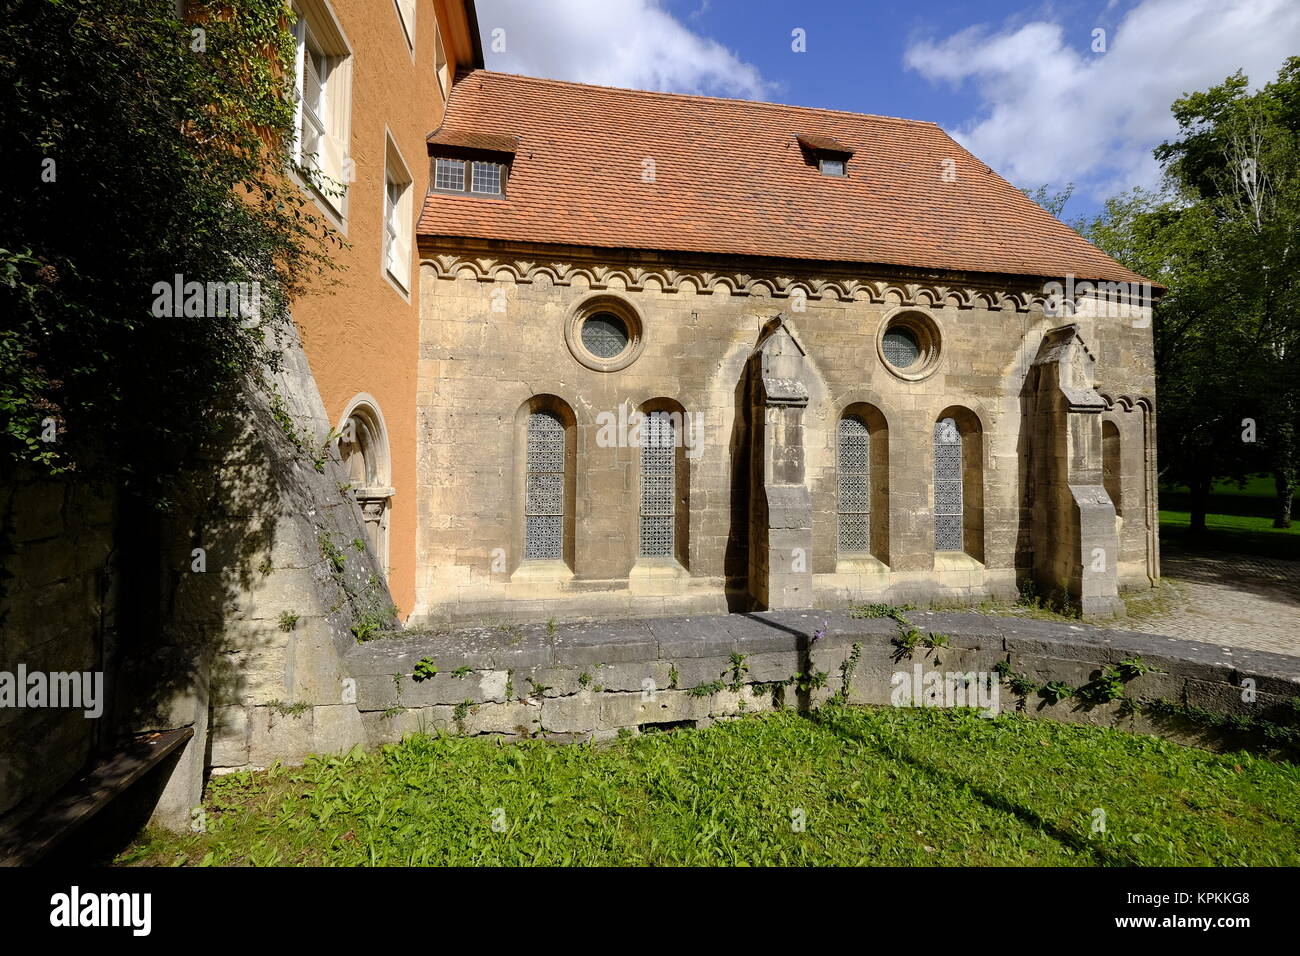 Monastero schulpforte con giardino del monastero in schulpforte a naumburg sulla strada romantica,burgenlandkreis,sachsen-anhalt,germania Foto Stock